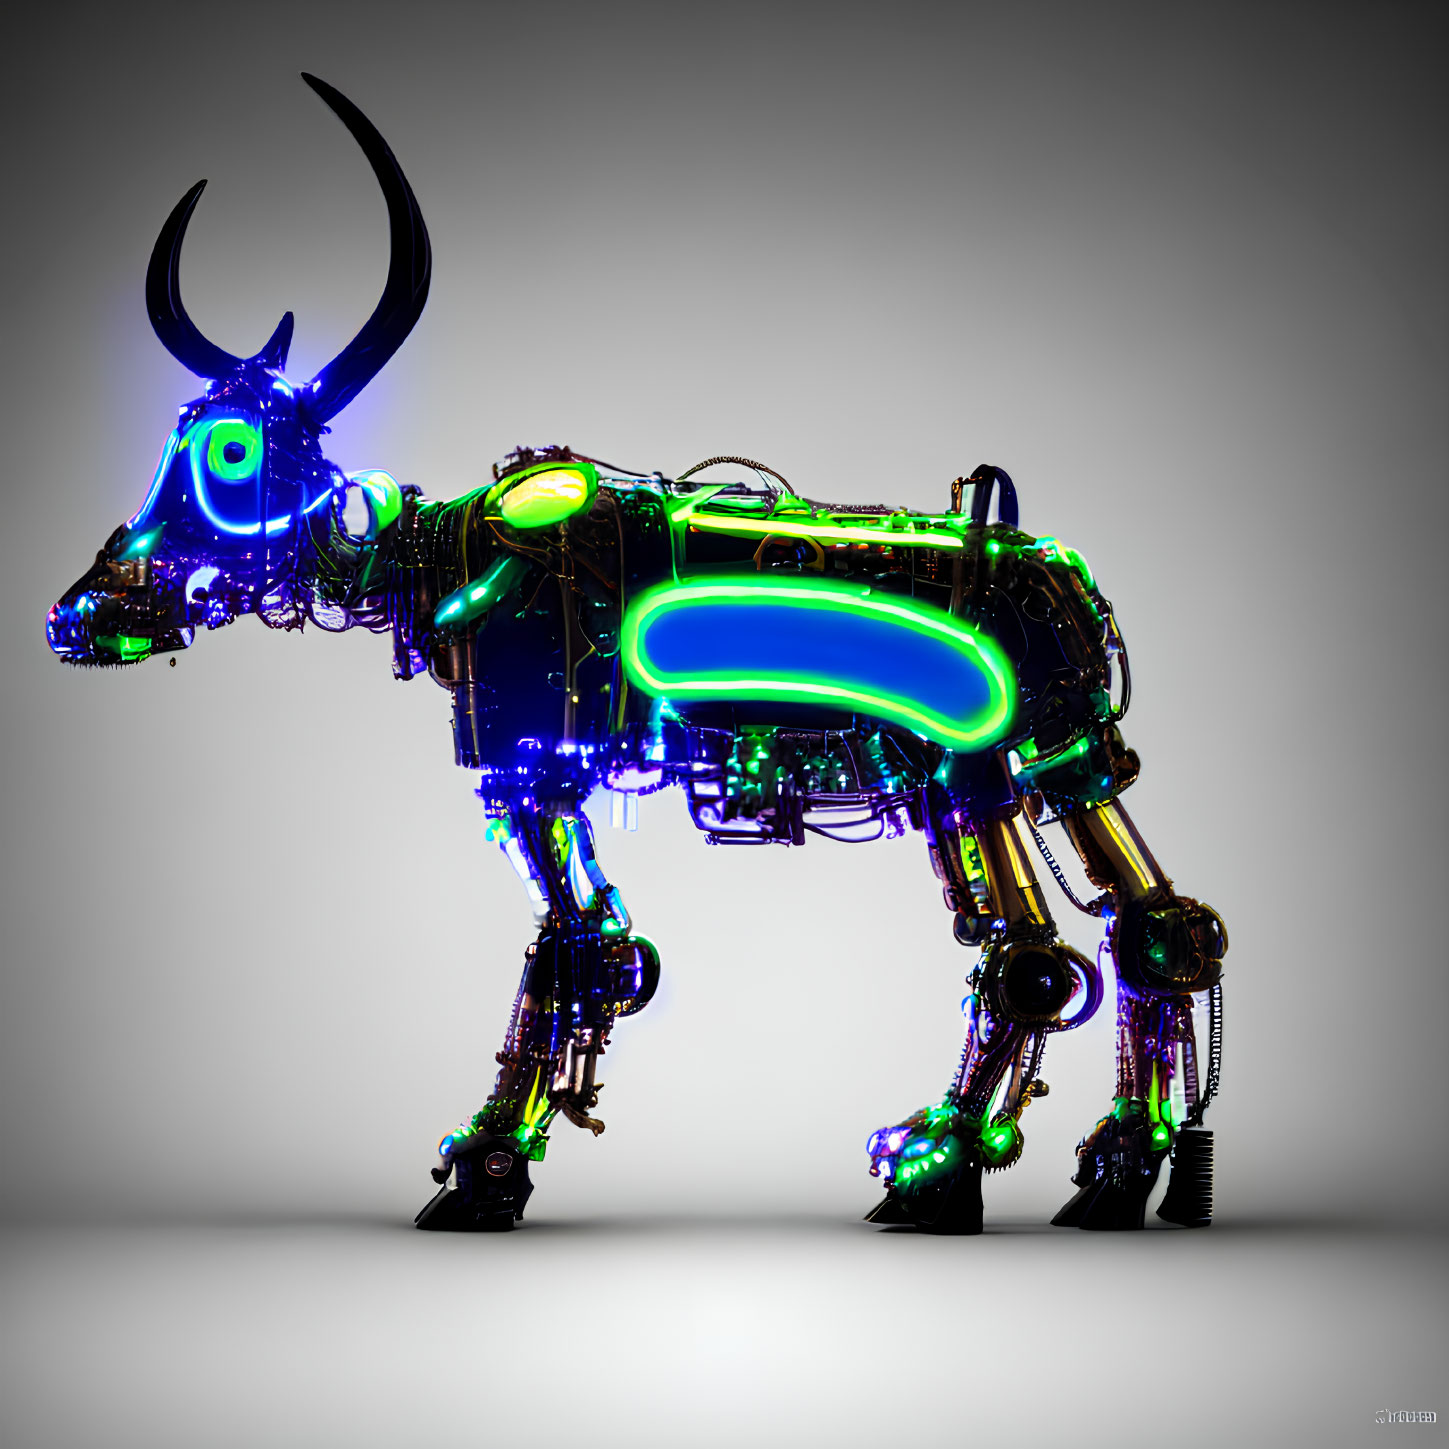 Futuristic 3D illustration of neon-lit robotic bull